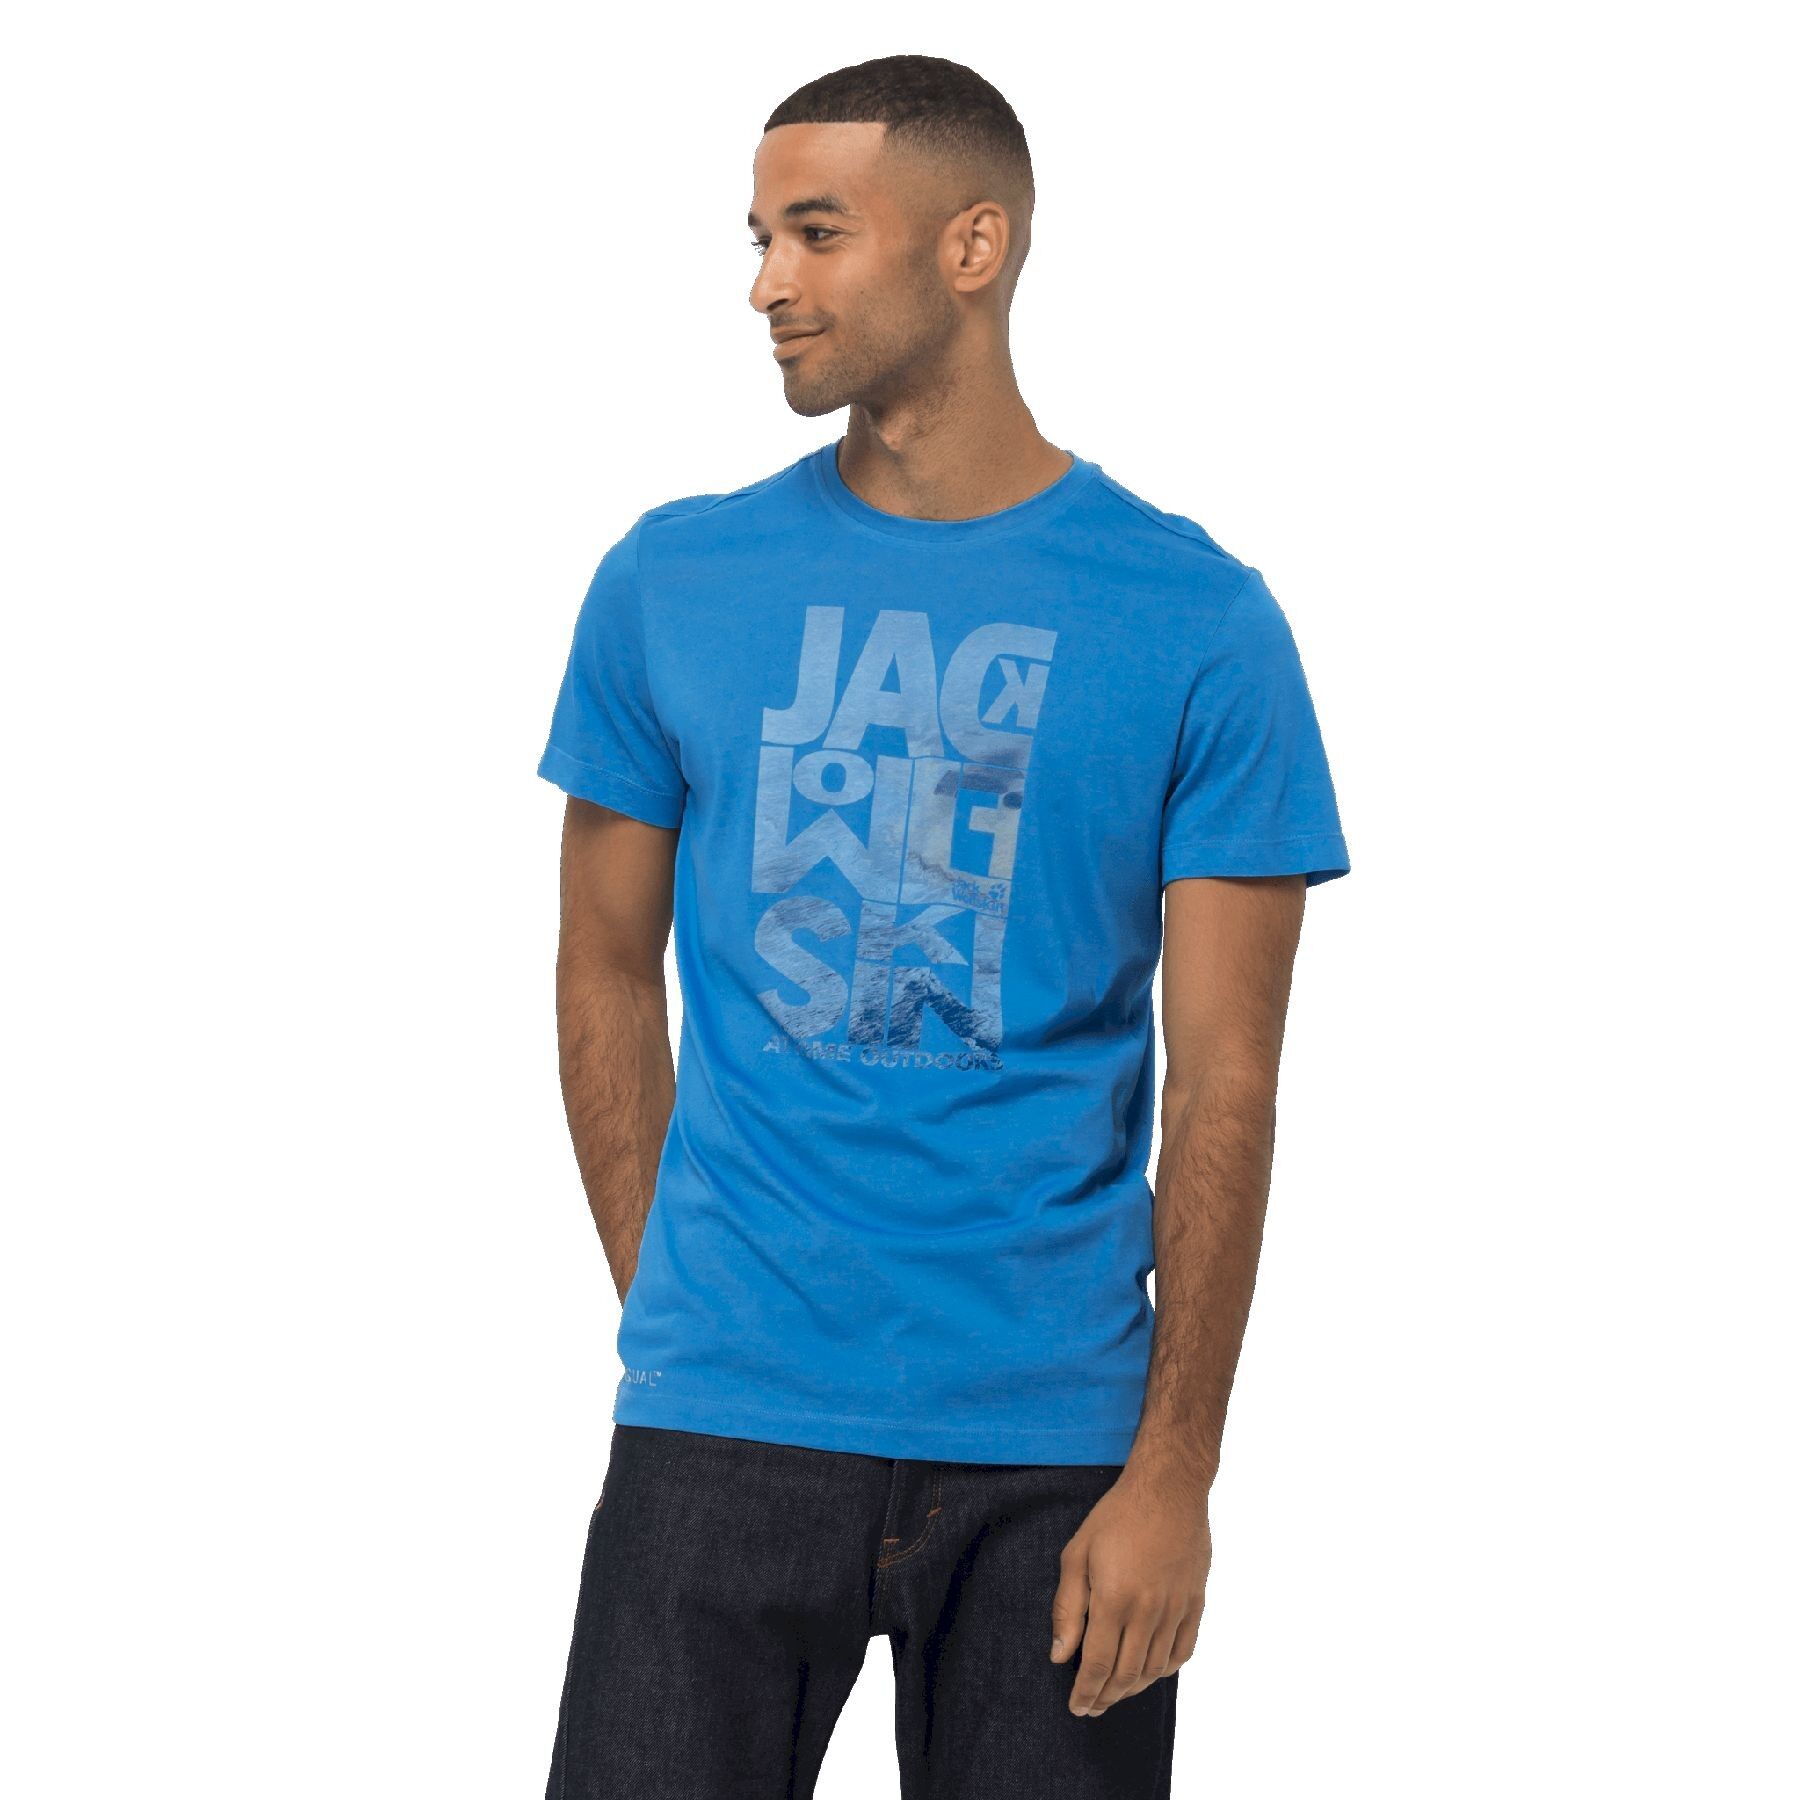 Jack Wolfskin Atlantic Ocean T - T-shirt - Men's